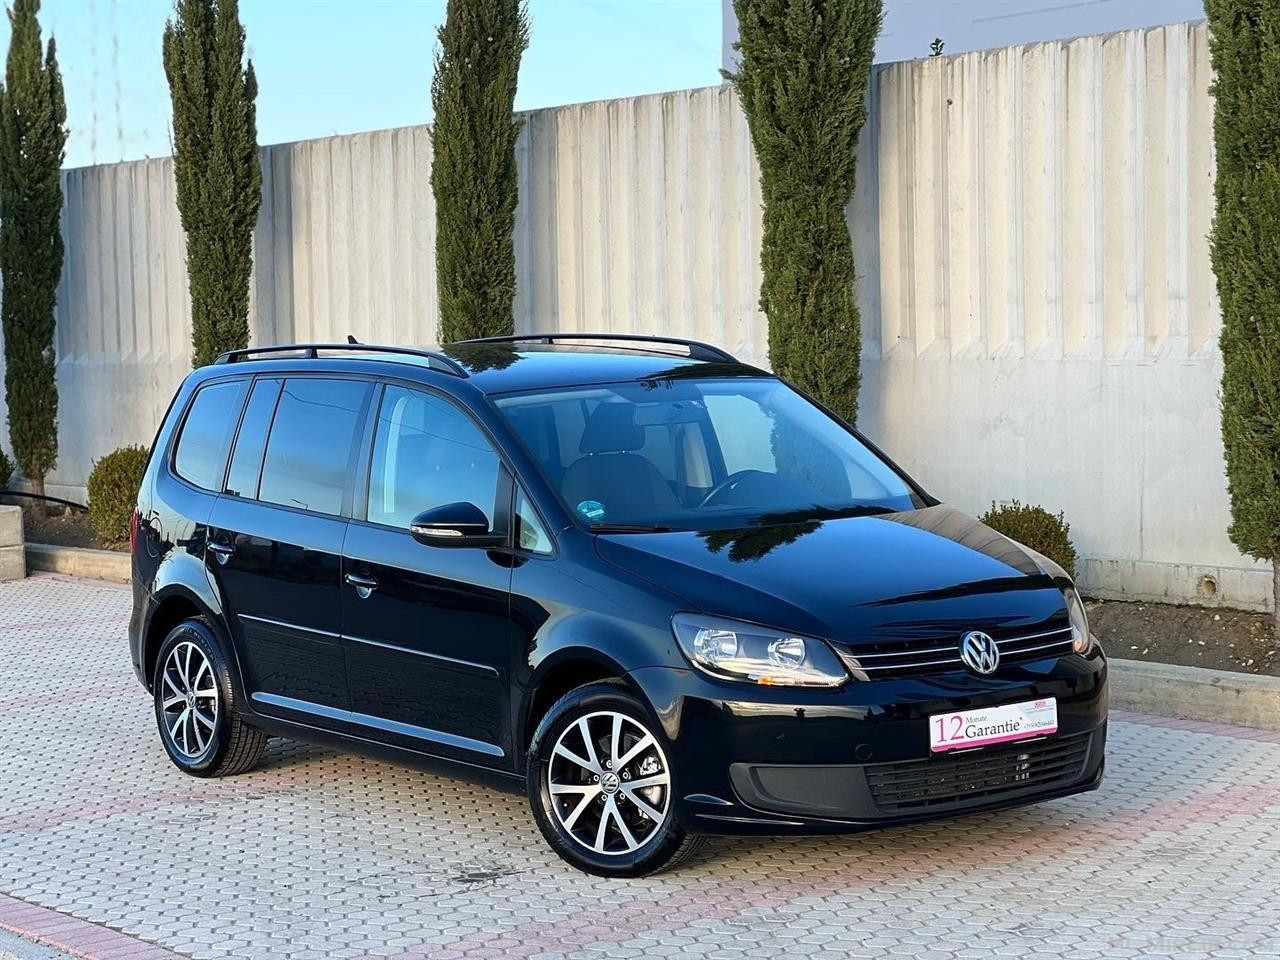 ❌ VW TOURAN 1.6 NAFTE - 2014 - KAMBIO MANUALE - 5 VENDE❌